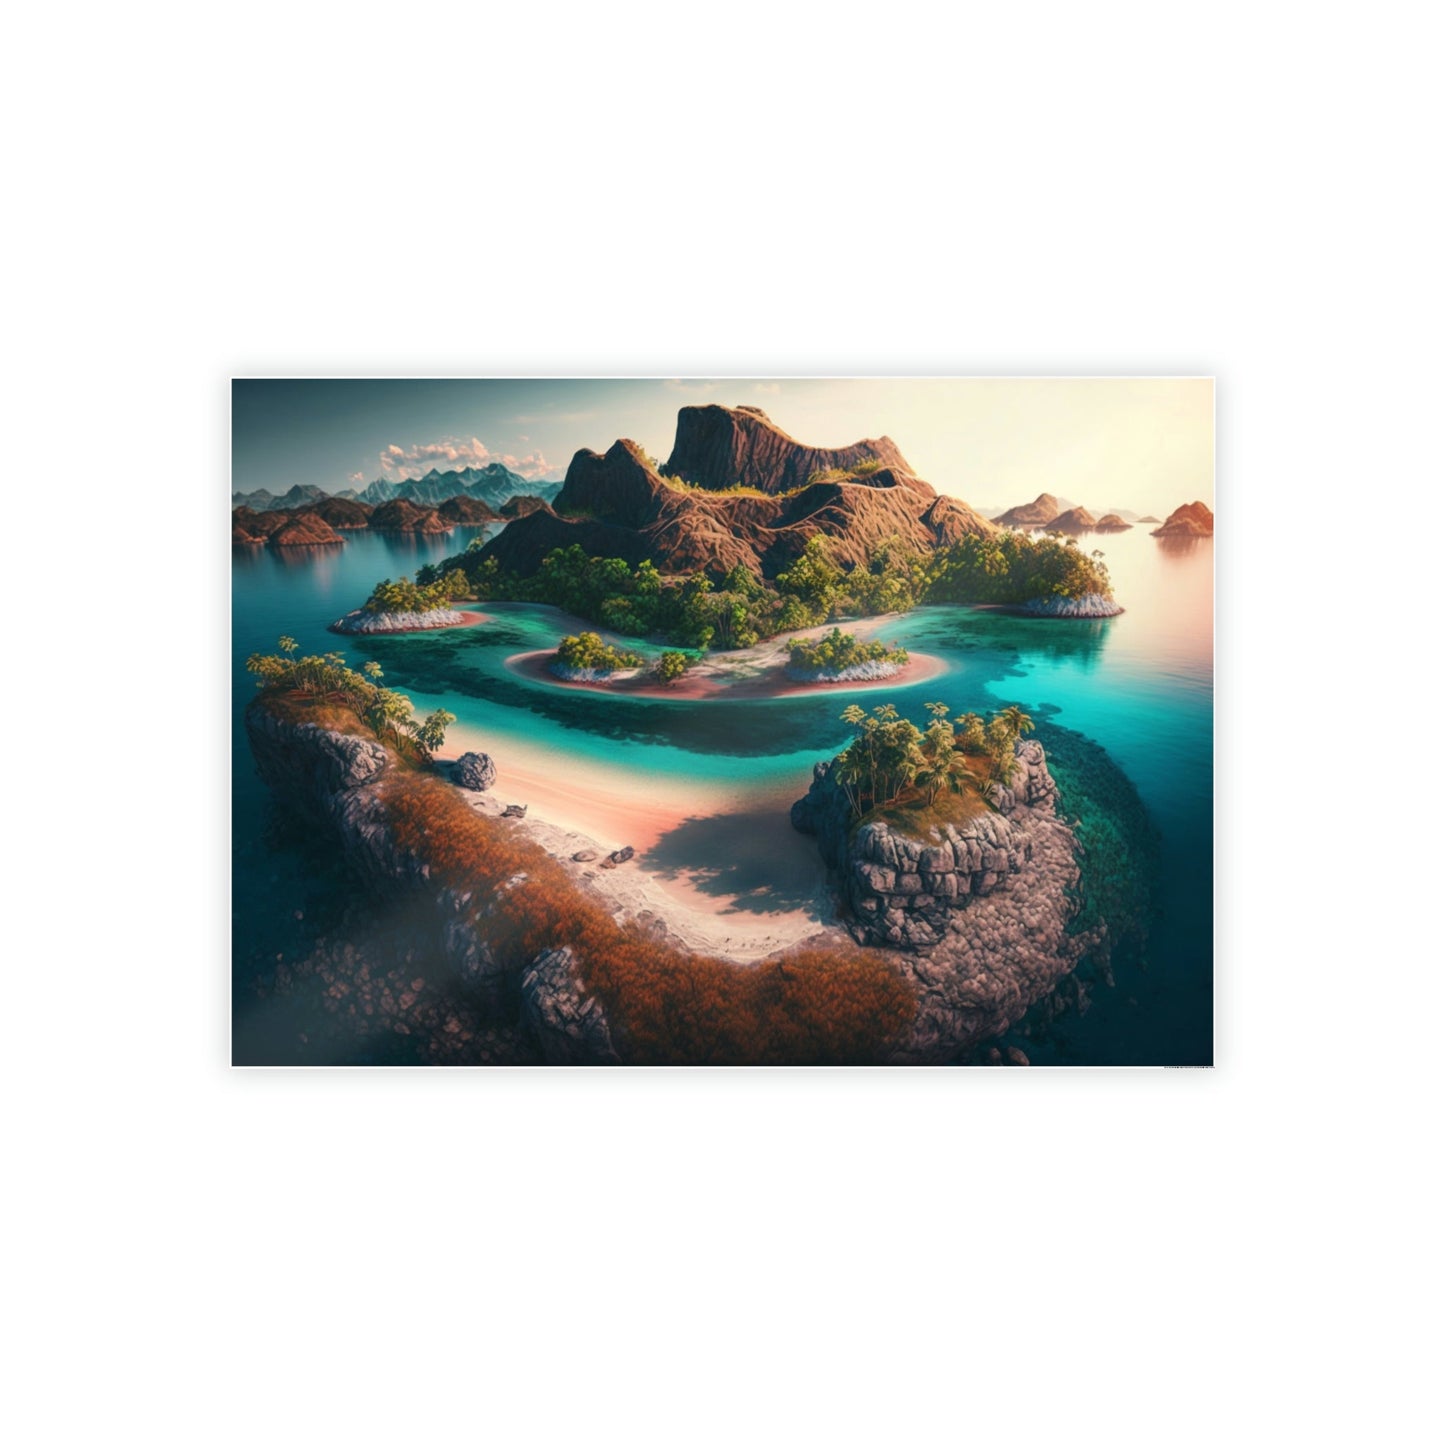 Island Dreams: A Colorful Tropical Scene on Canvas